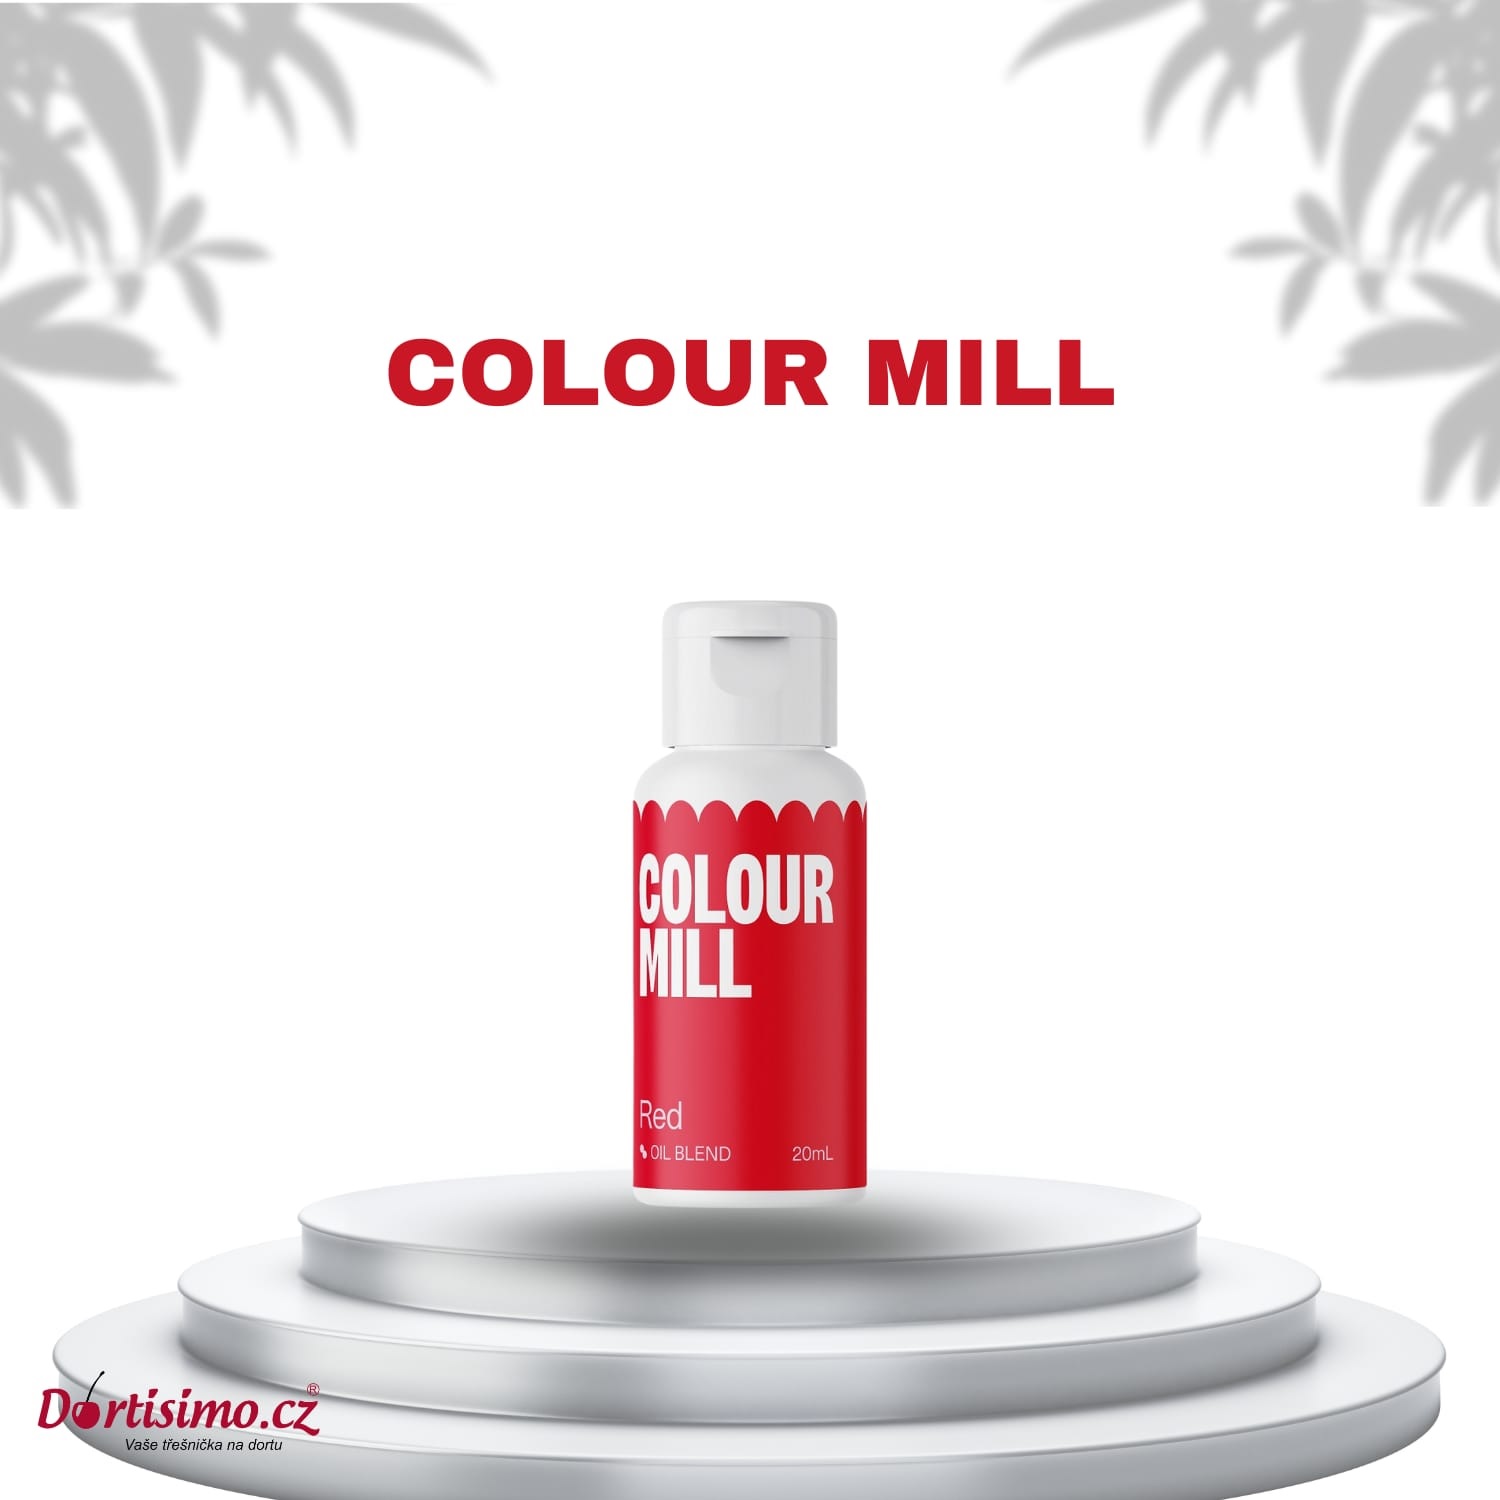 Obrázek k výrobku 23682 - Colour Mill olejová farba Red (20ml)